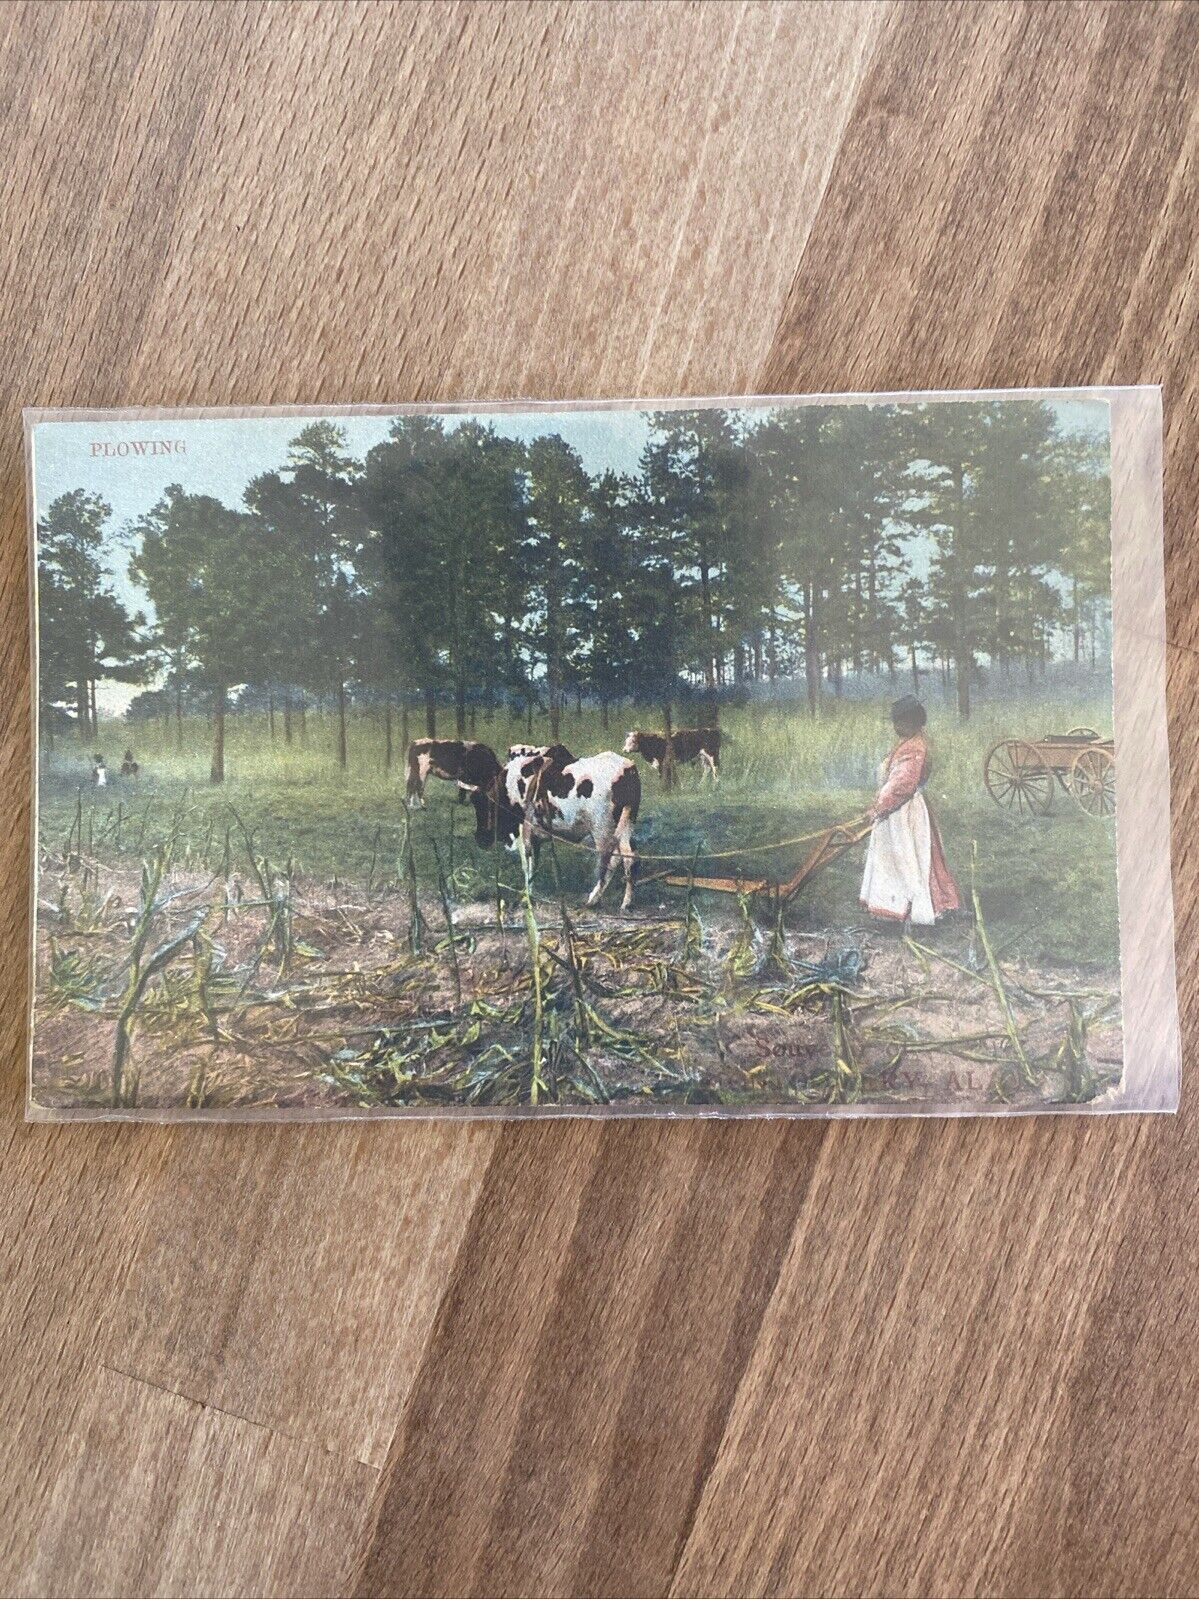 Black Americana “Plowing” Vintage Linen Postcard